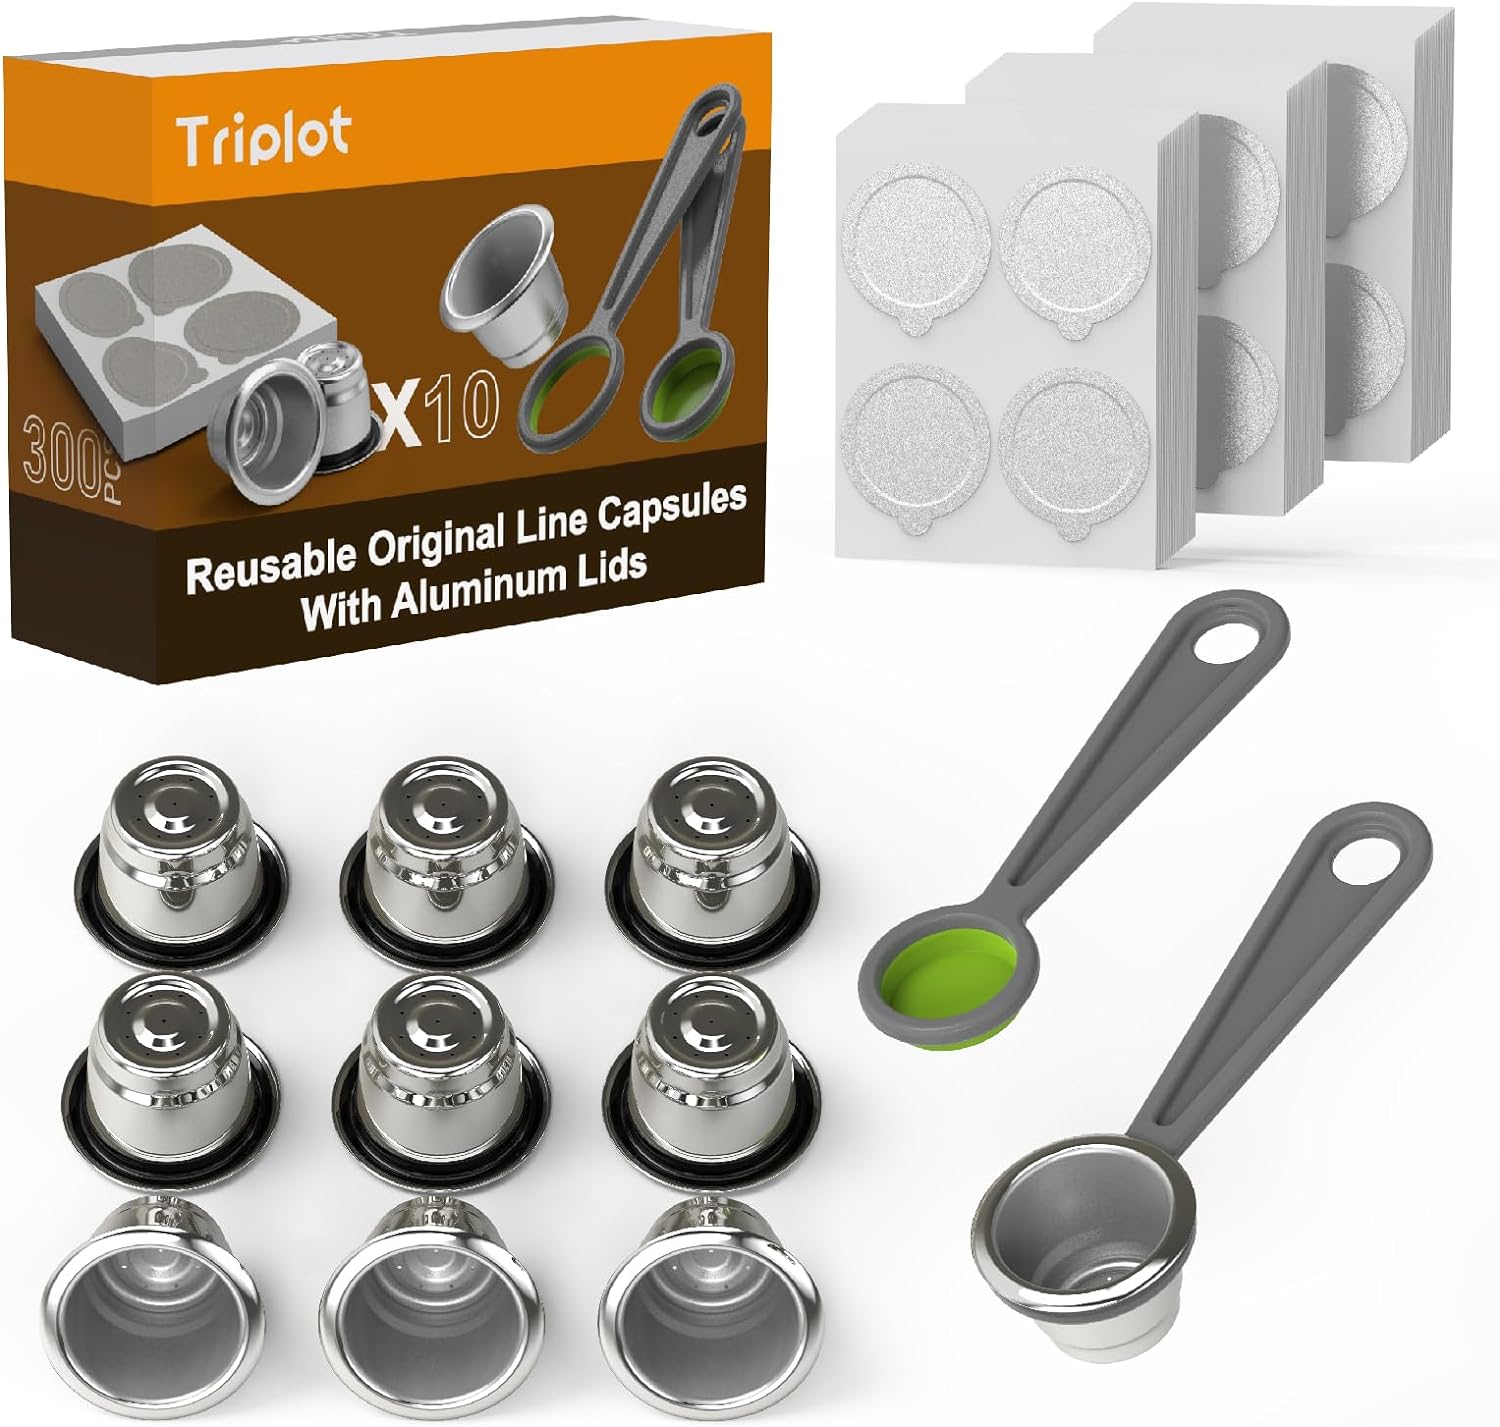 Triplot Reusable Capsules for Nespresso OriginalLine - 6pcs Refillable Coffee Pods,Stainless Steel Cups Compatible for Nespresso OriginalLine Machine (6Pods+100pcs Lids+Tray+Refilling ToolTamper)